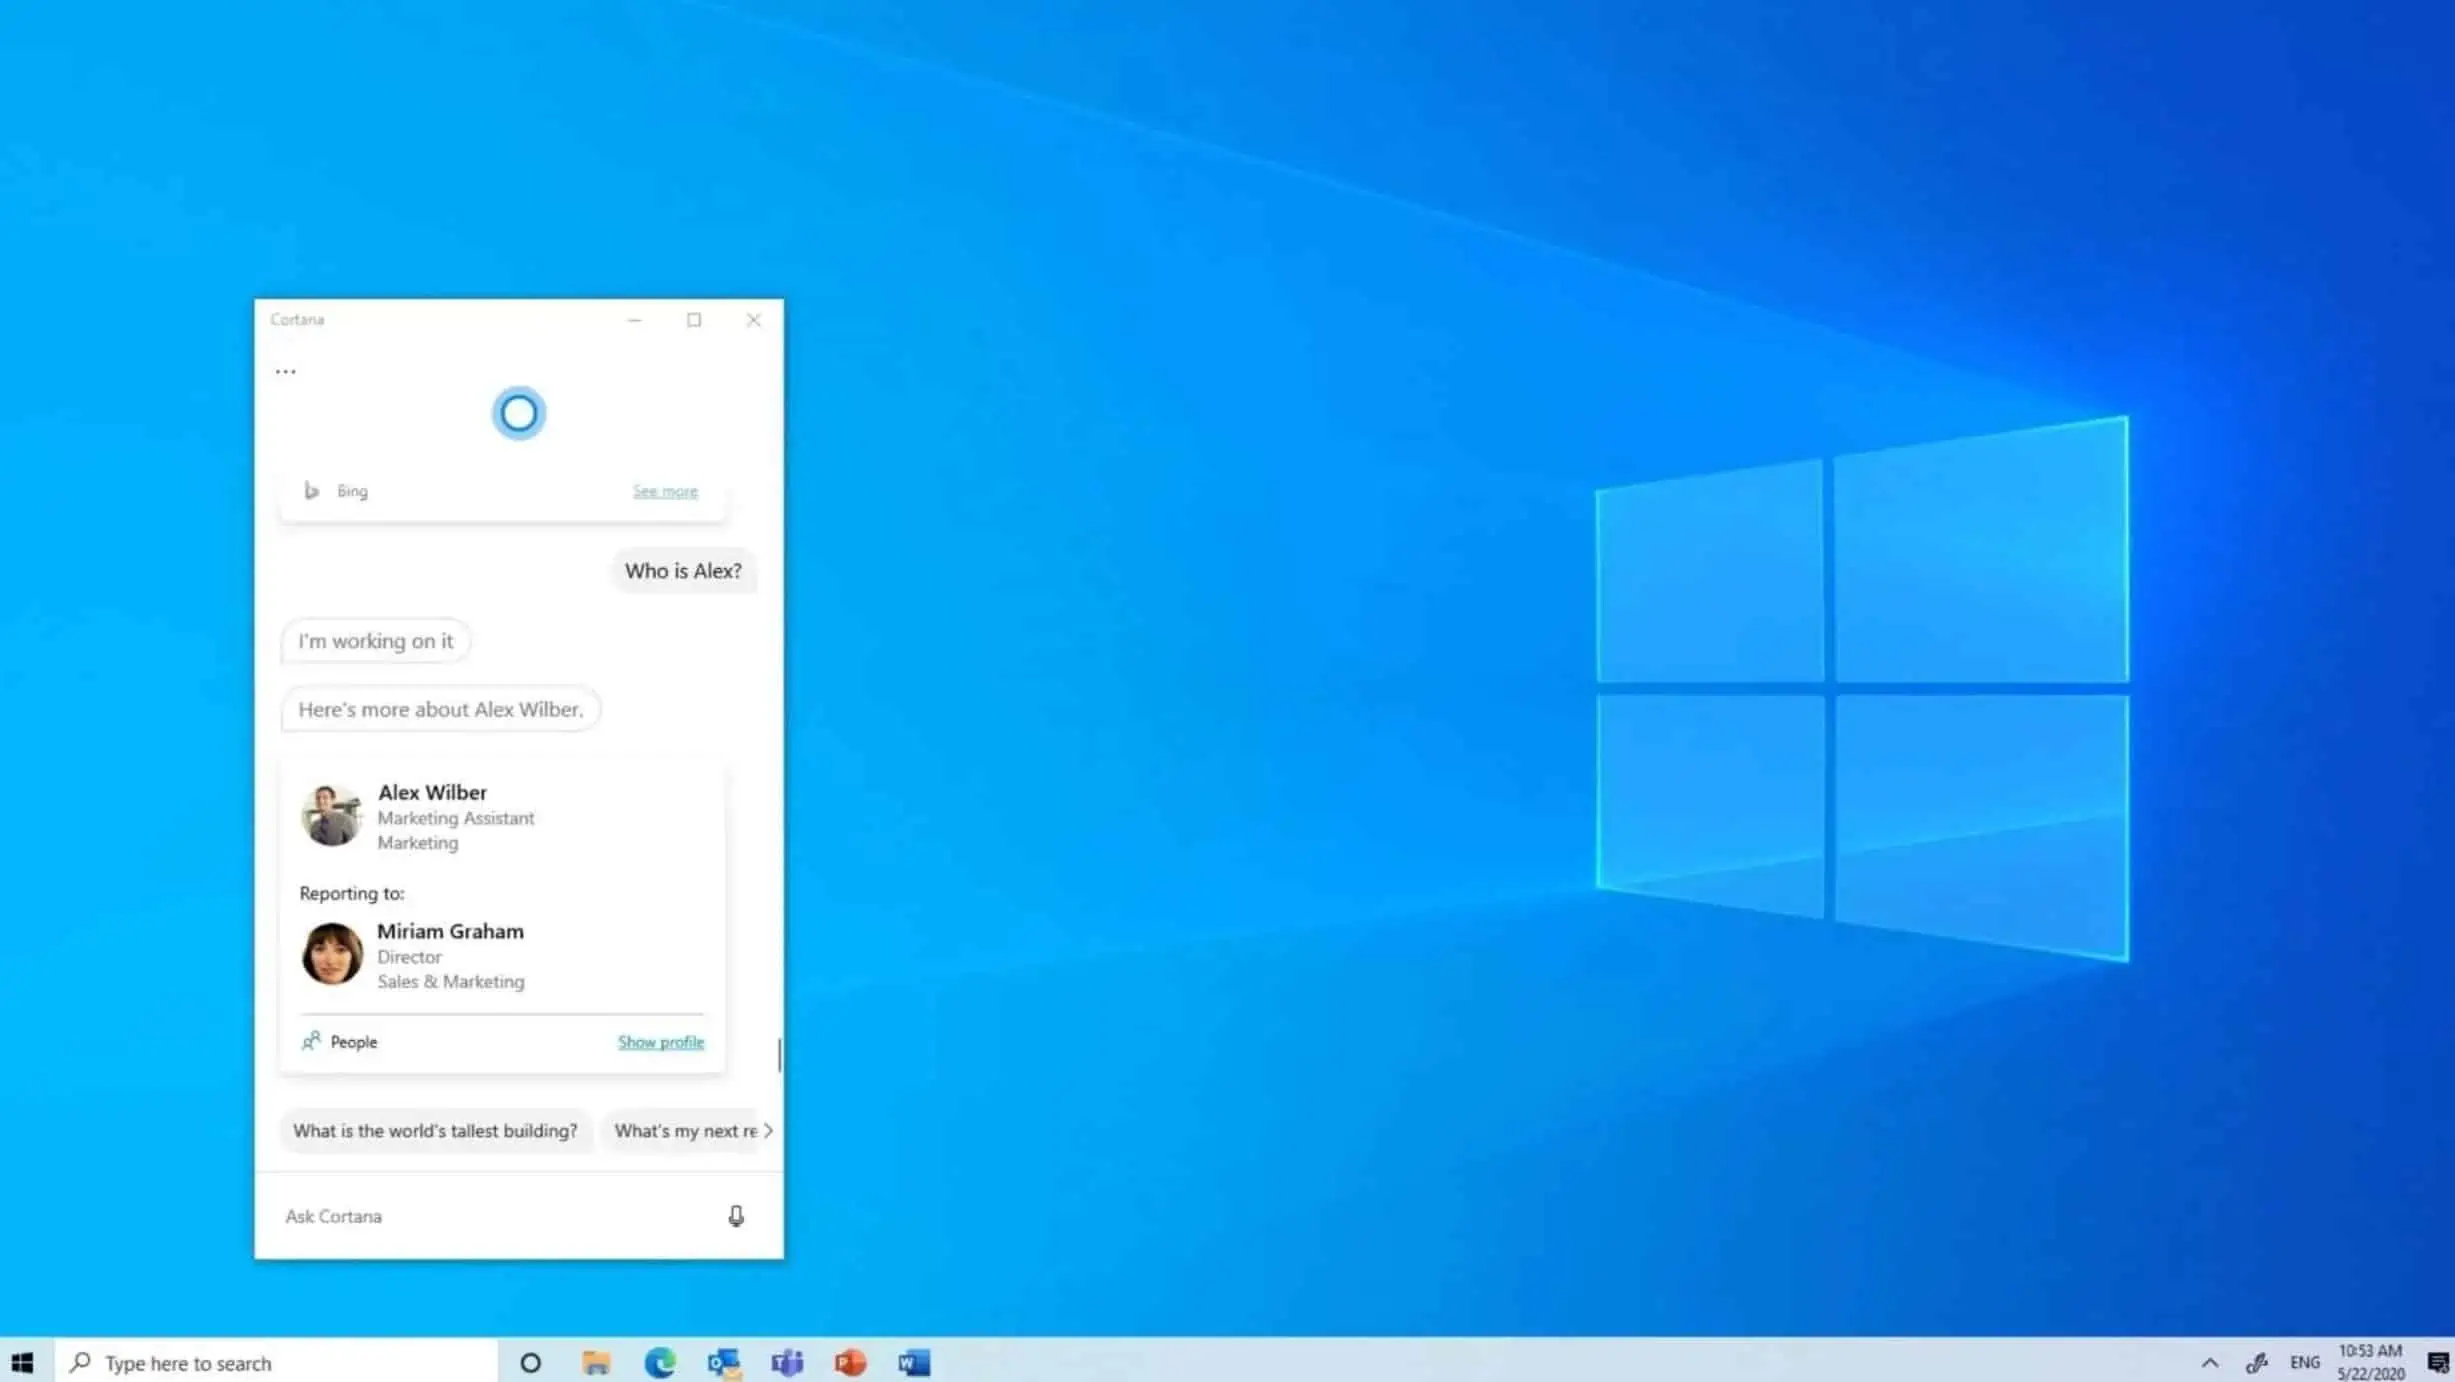 Microsoft Cortana on Windows